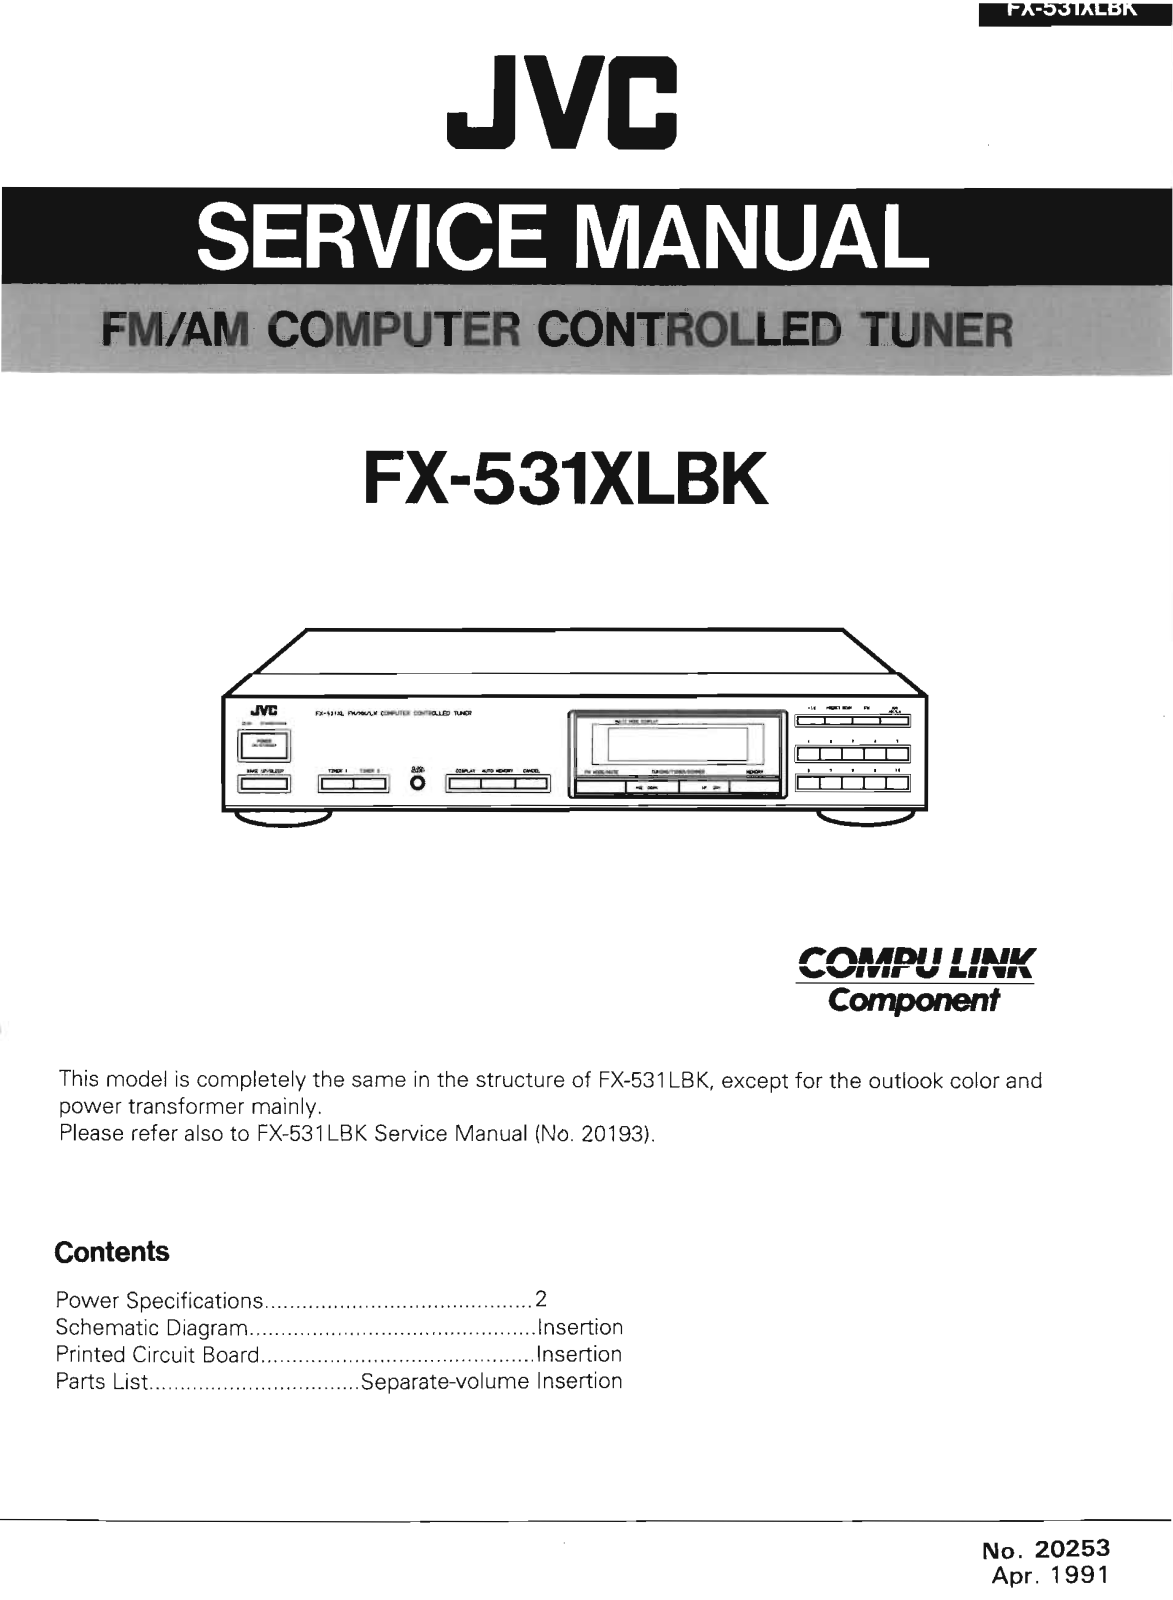 Jvc FX-531-XLBK Service Manual